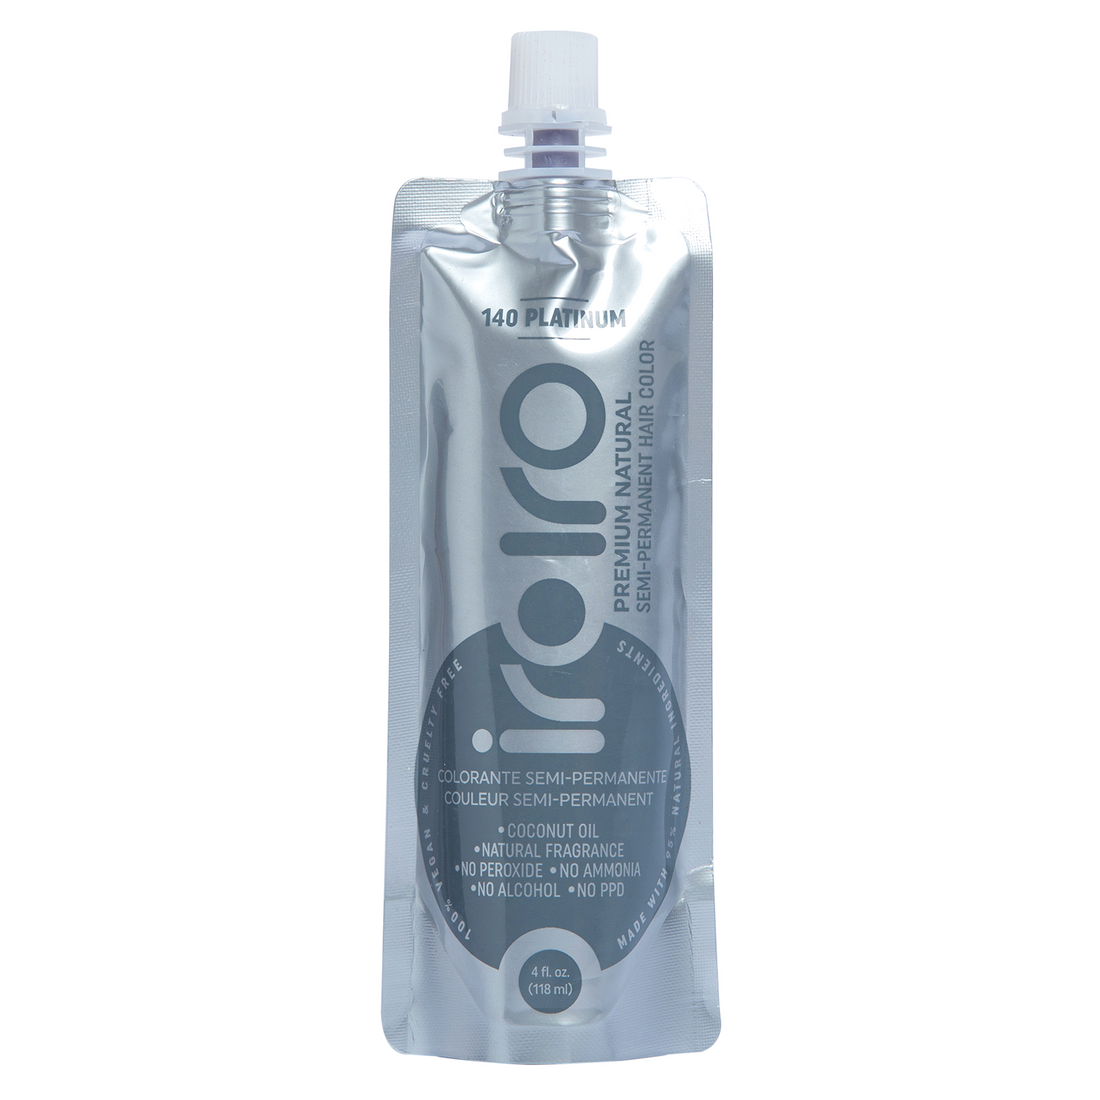 Iroiro 140 Platinum Vegan Cruelty-Free Natural Semi-Permanent Hair Color